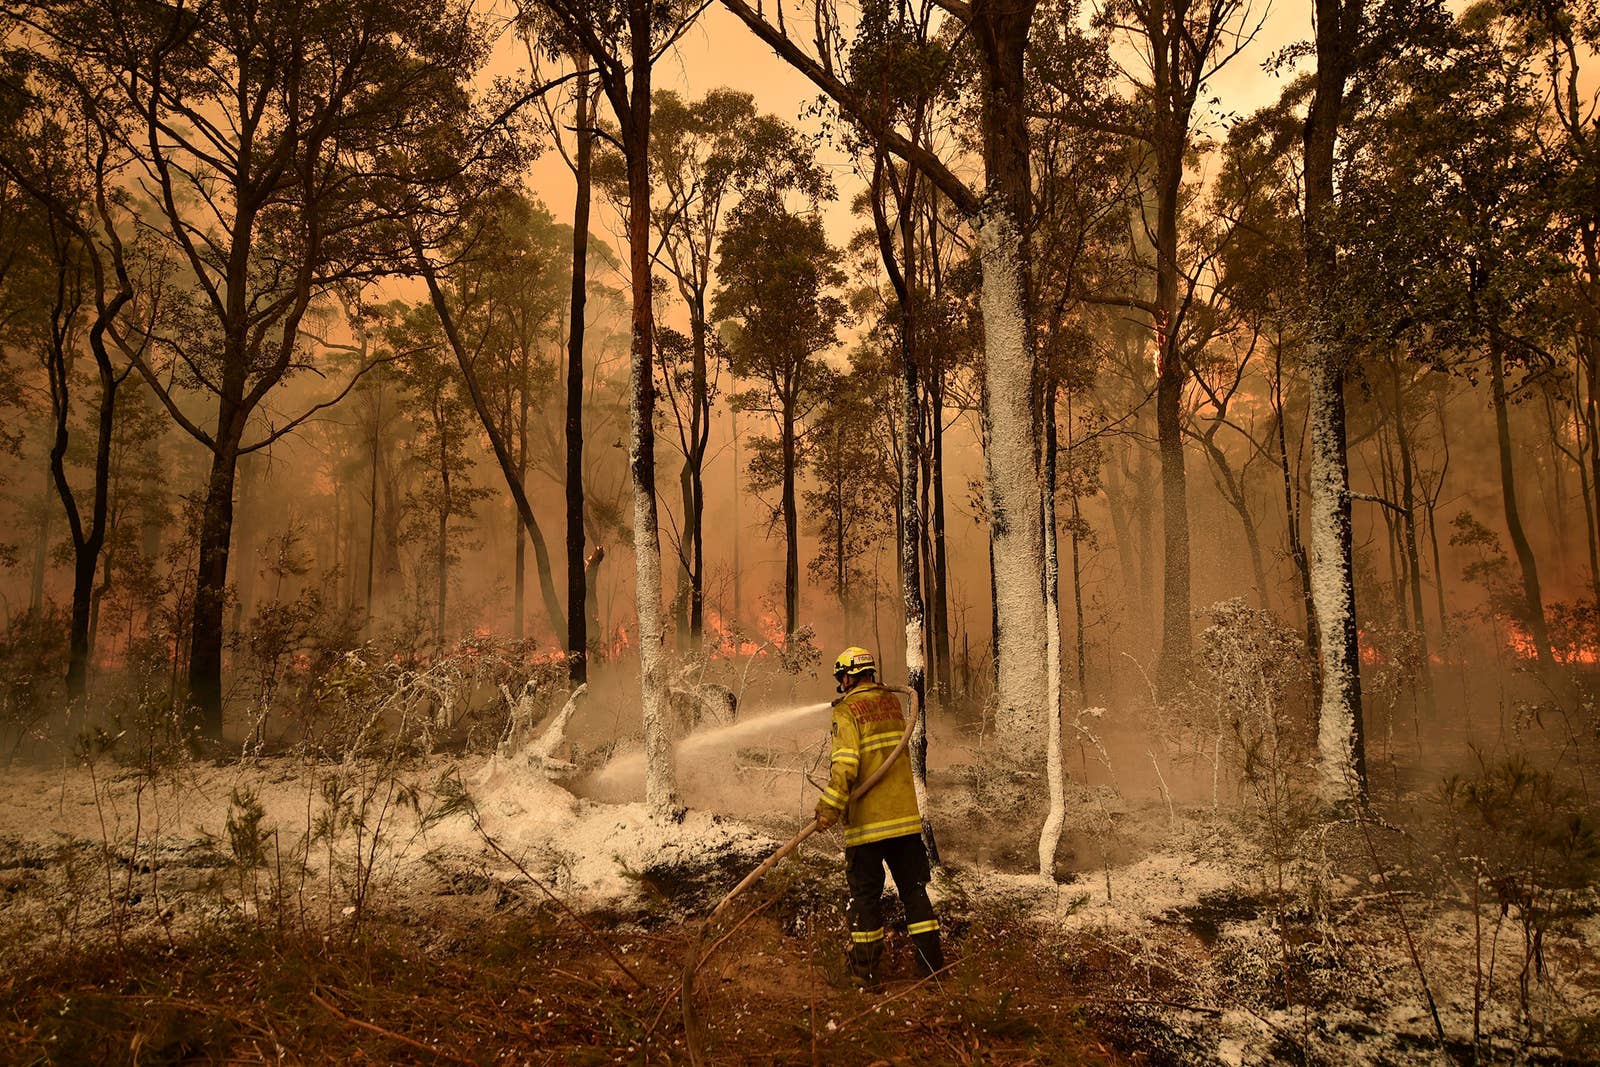 australian bushfire 2020 humanity fire fighter alone in the jungle